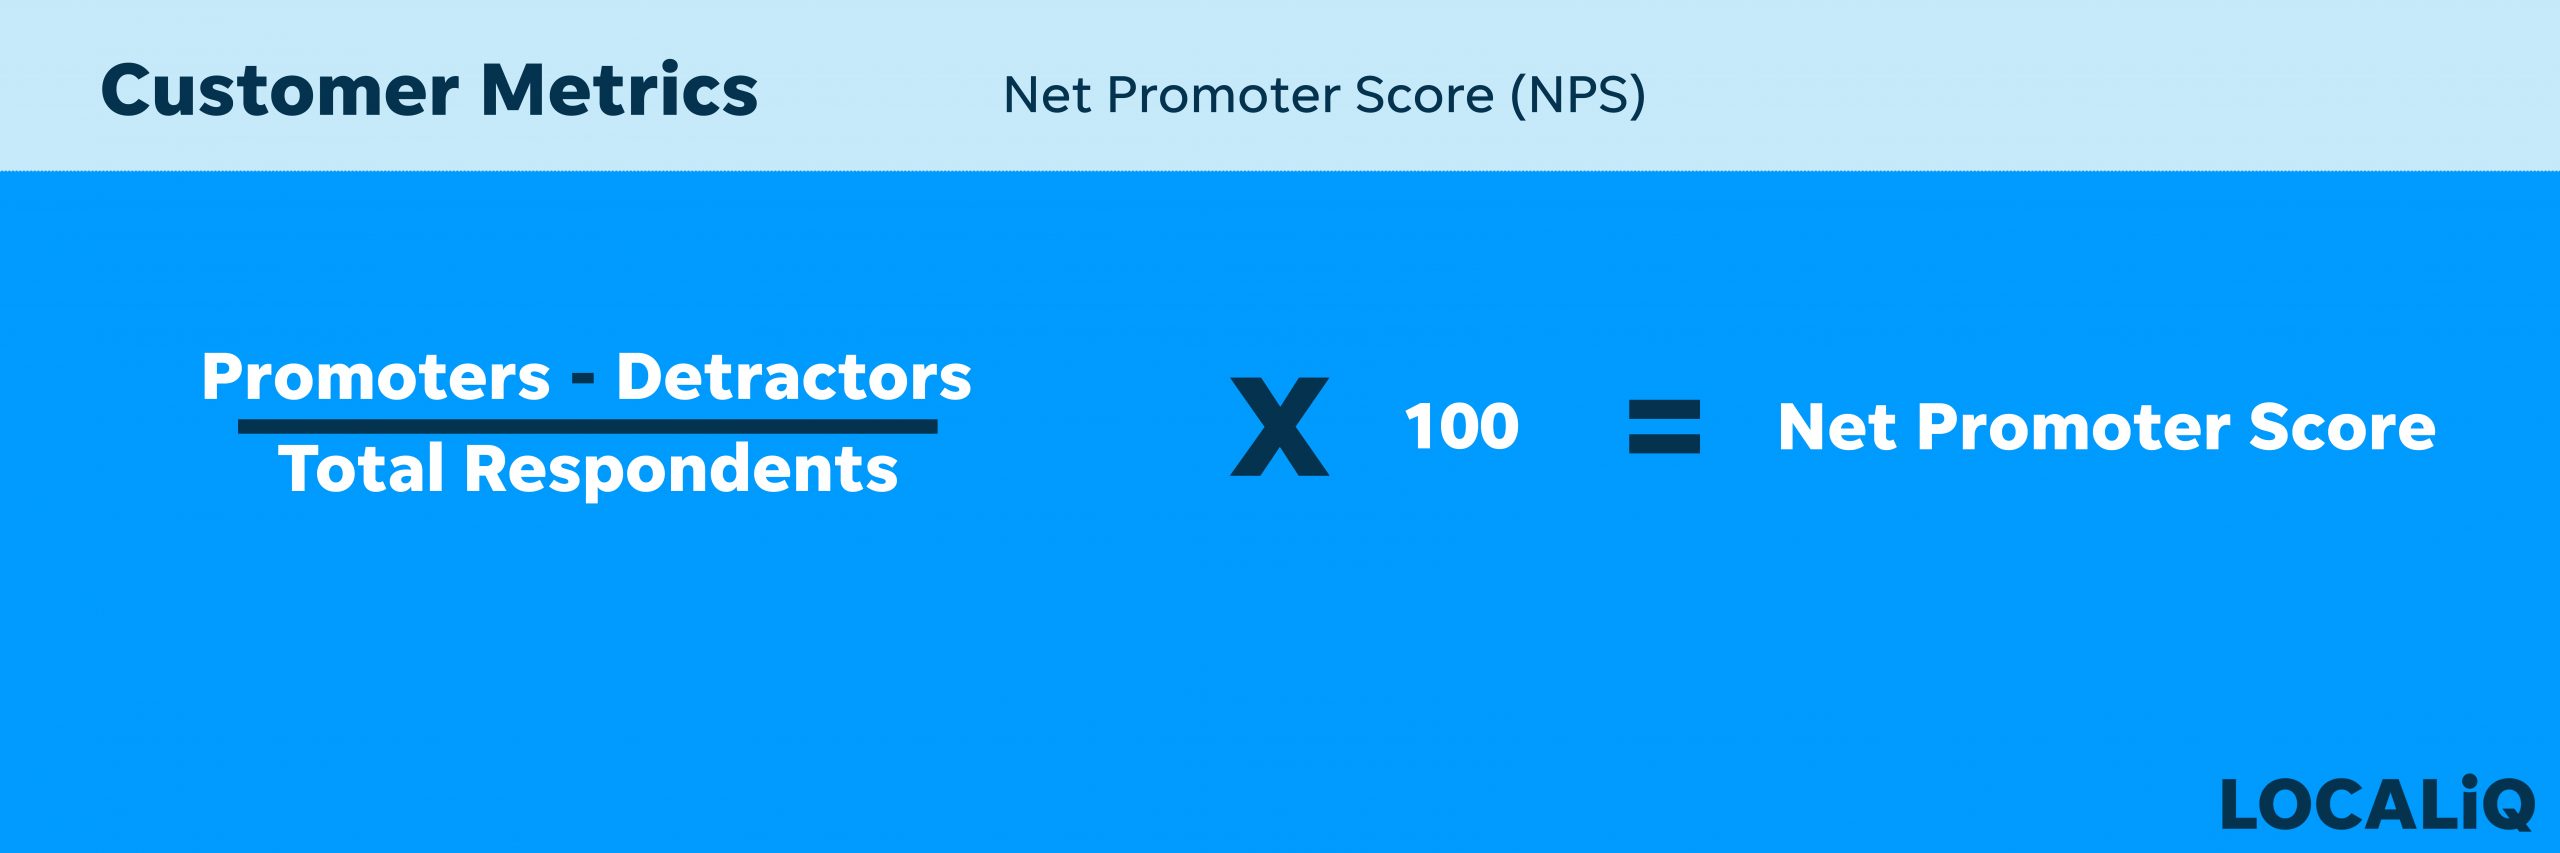 Customer Metrics| Net Promoter Score (NPS).